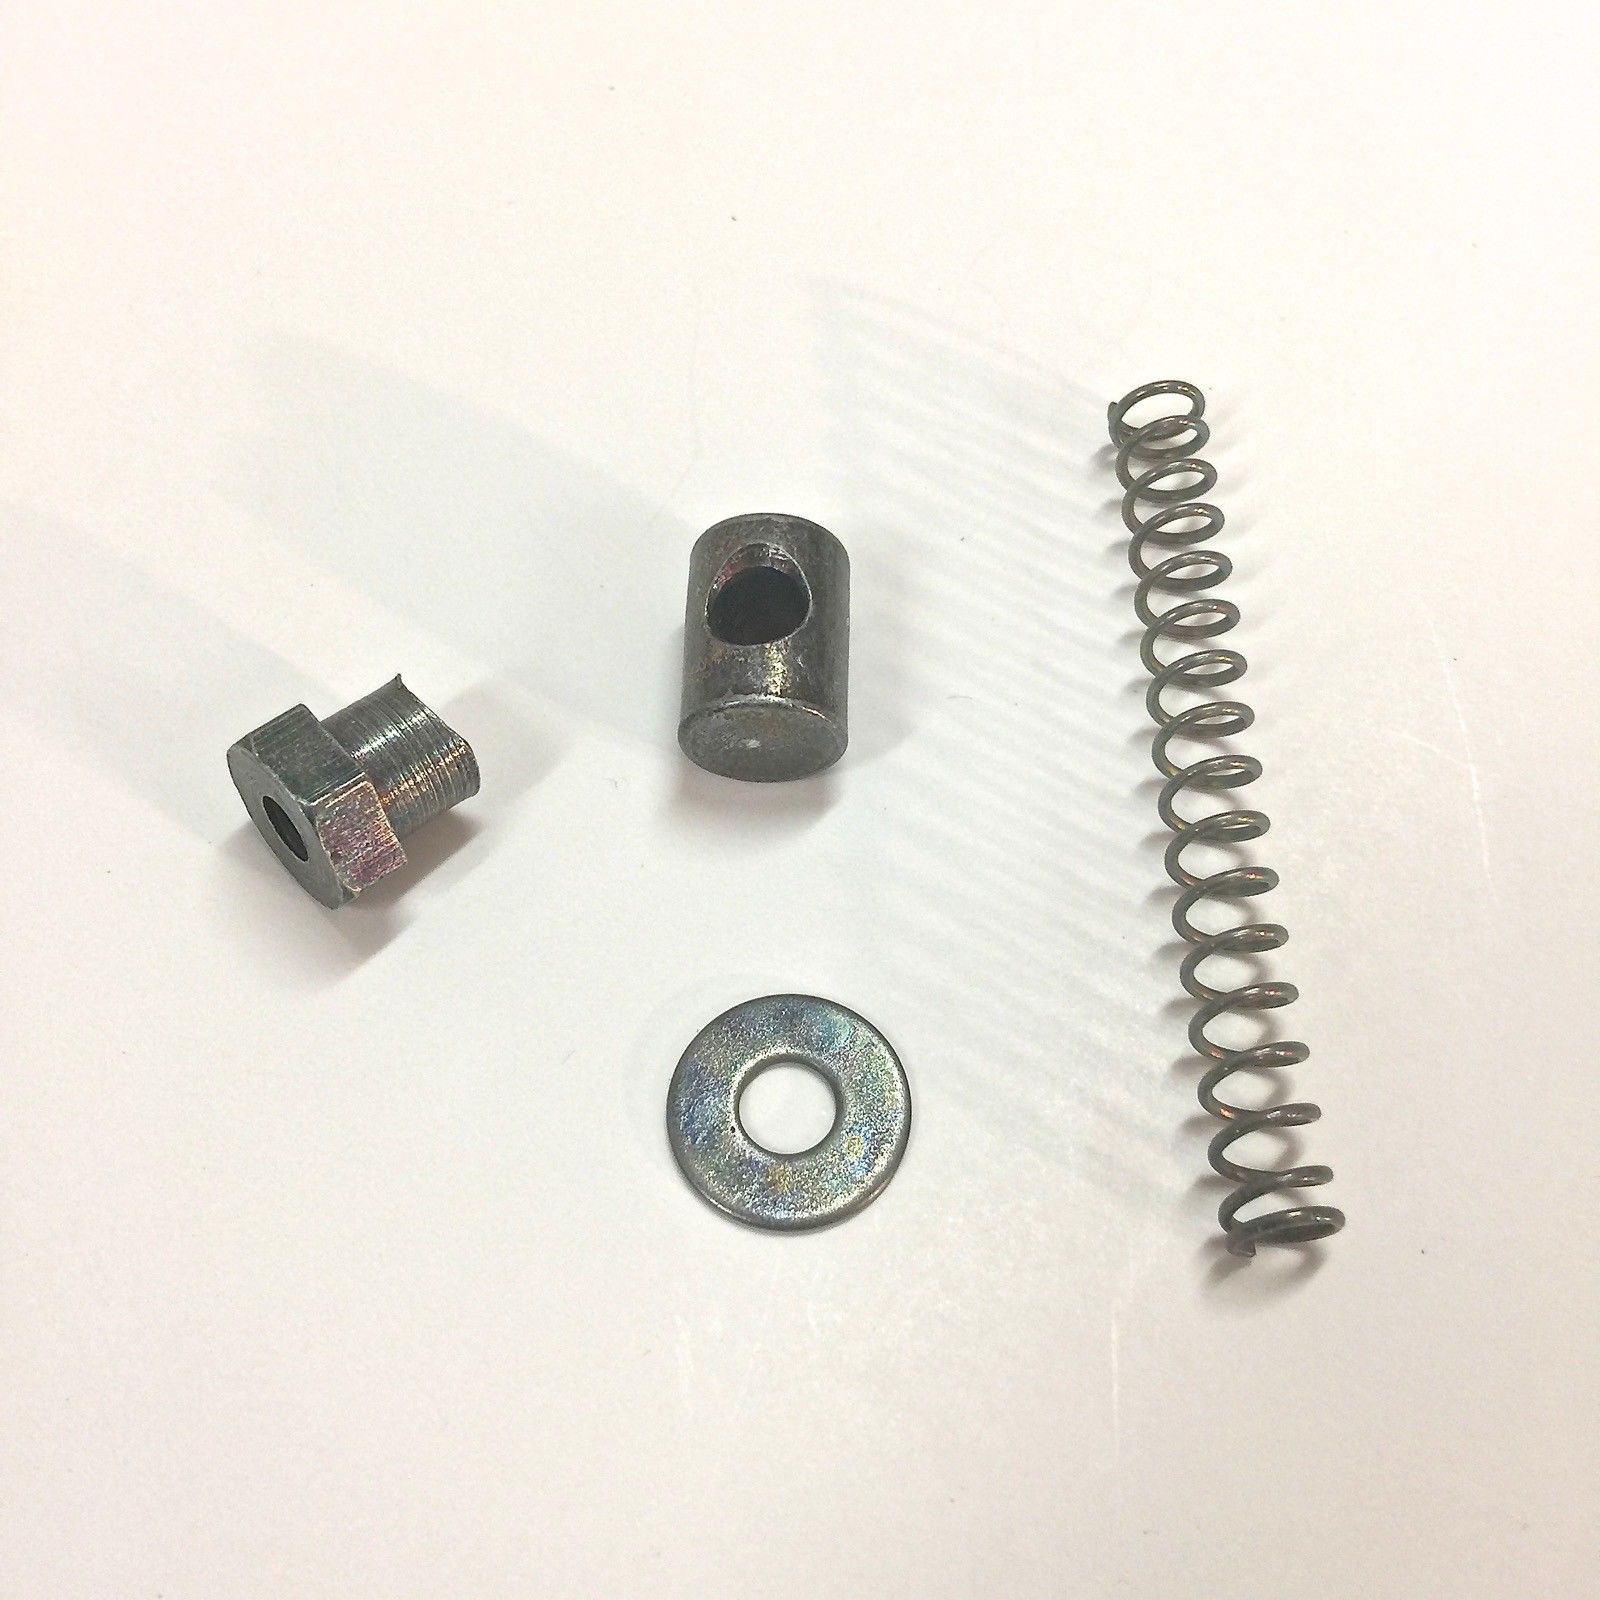 Suzuki SJ413 Samurai 86-95 Clutch Cable Repair Kit Nut Spring Pin Washer